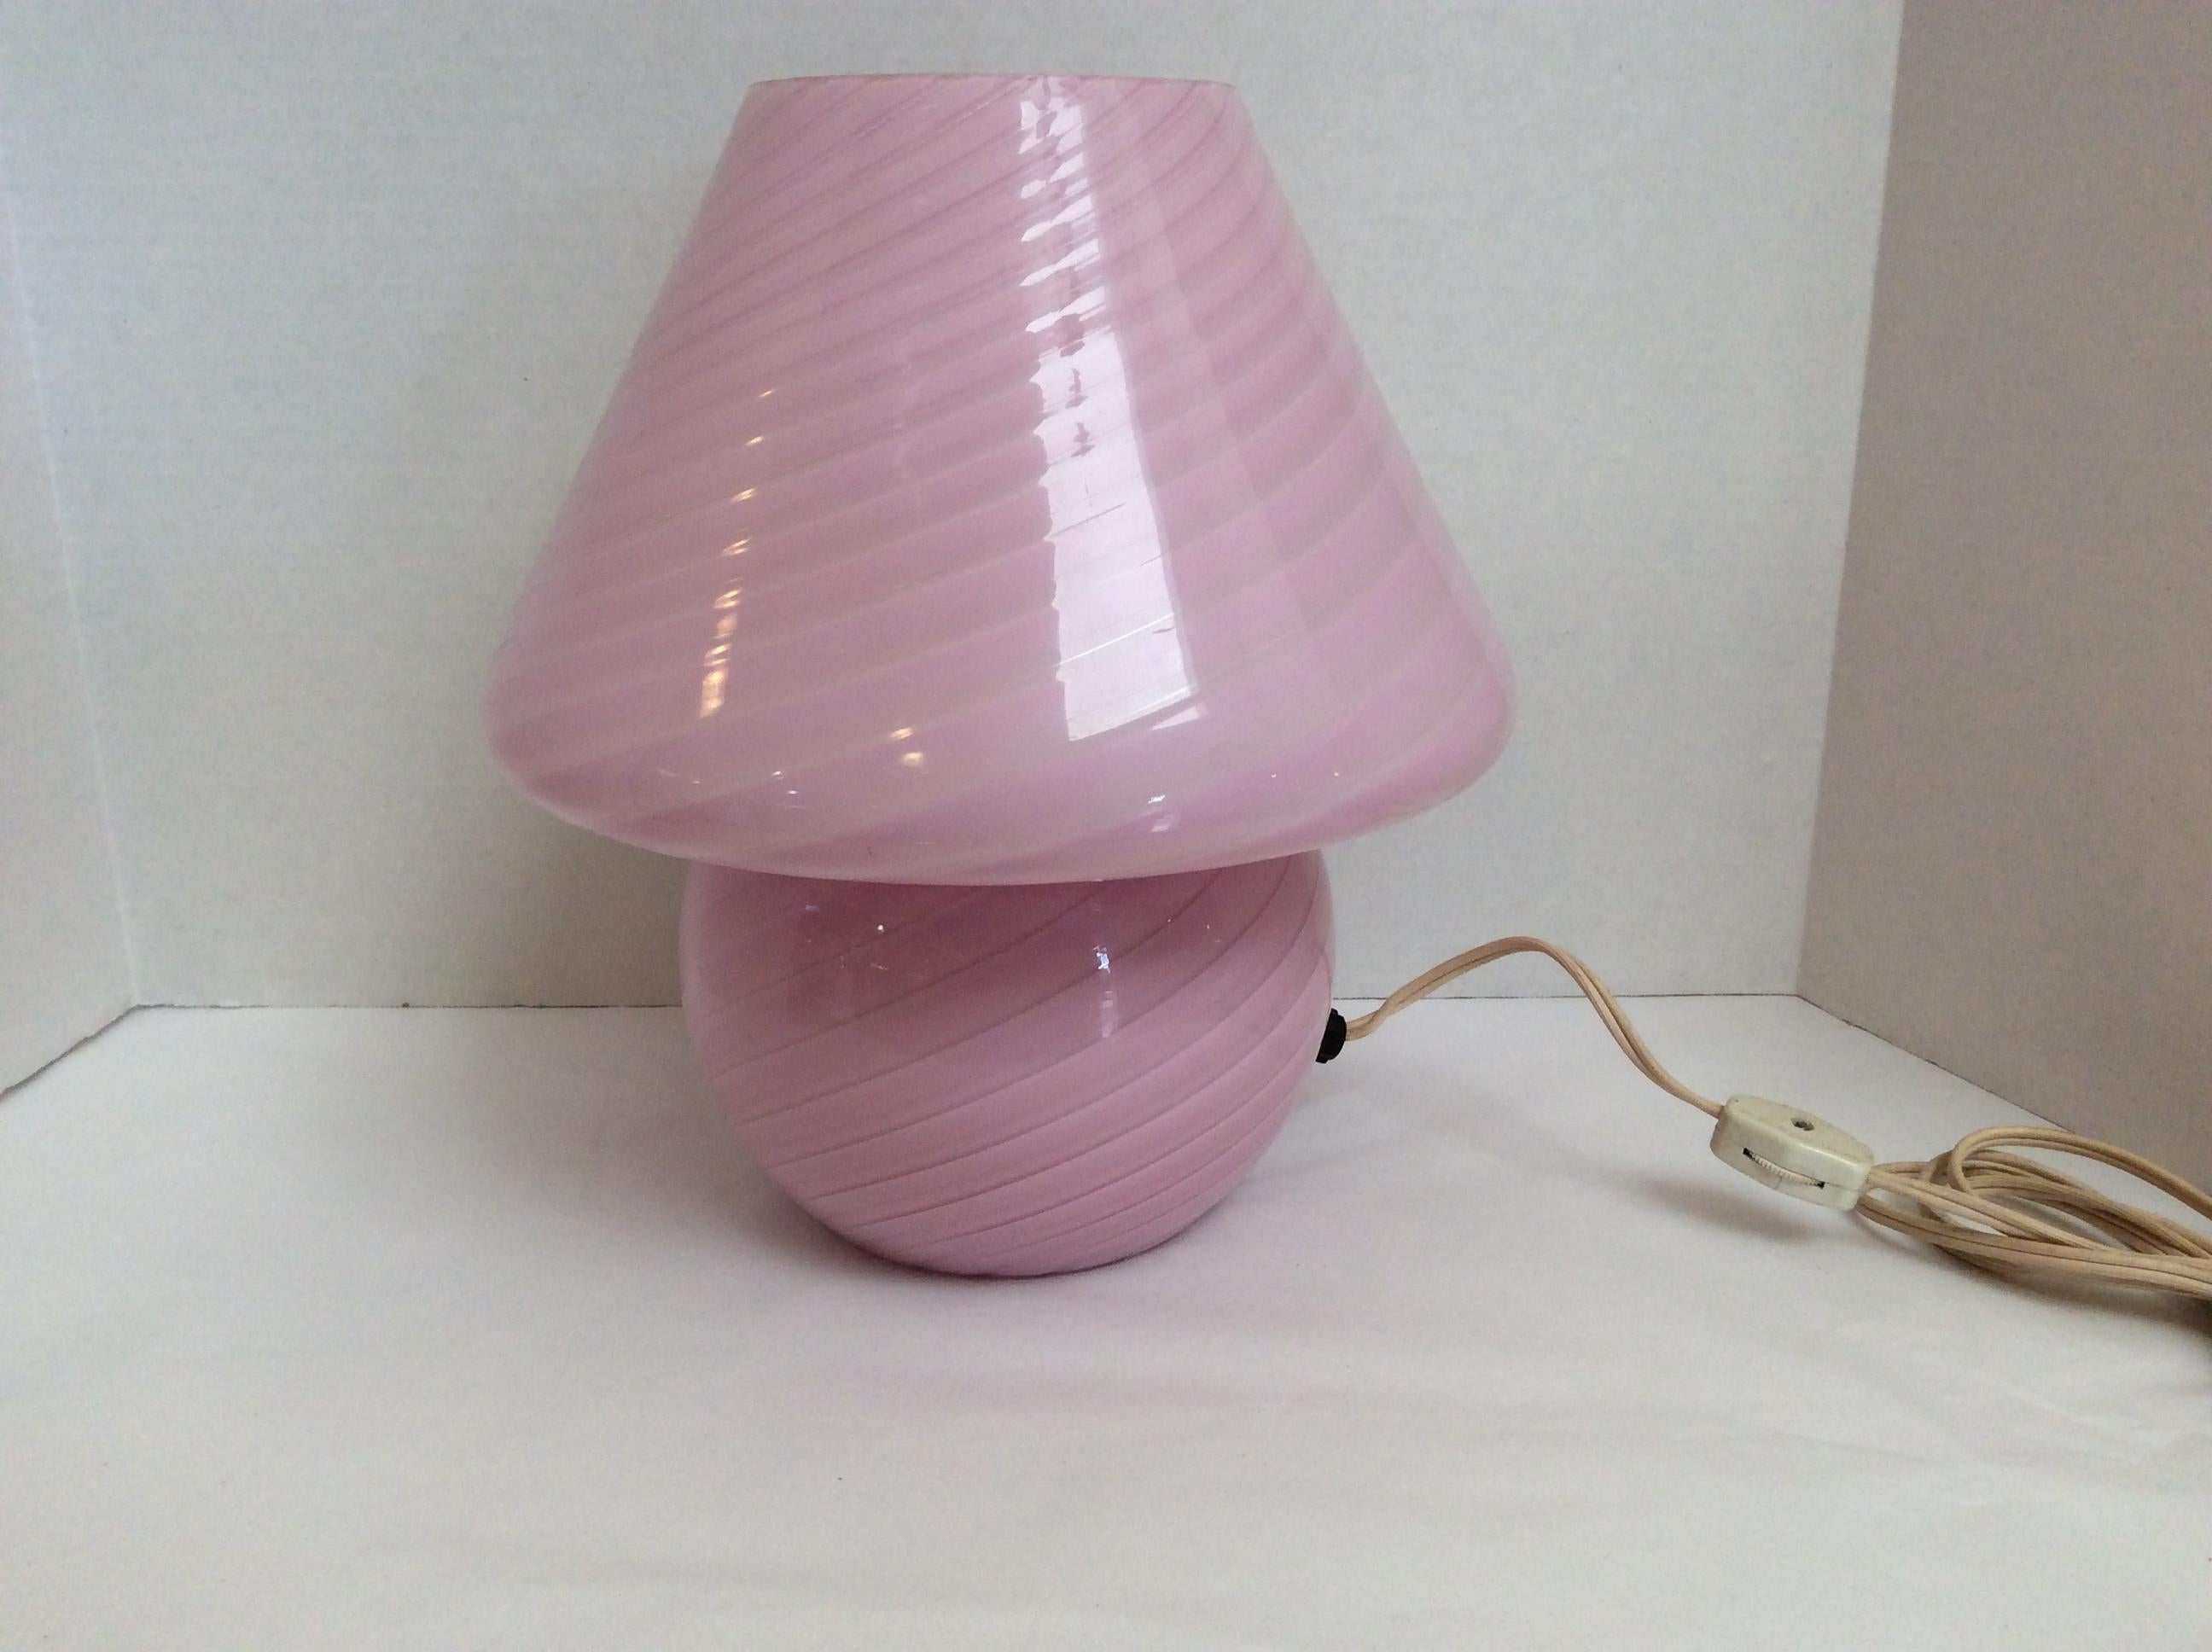 Italian Vetri Murano Glass Mushroom Table Lamp, Pink Swirl Design, Mid-Century Modern